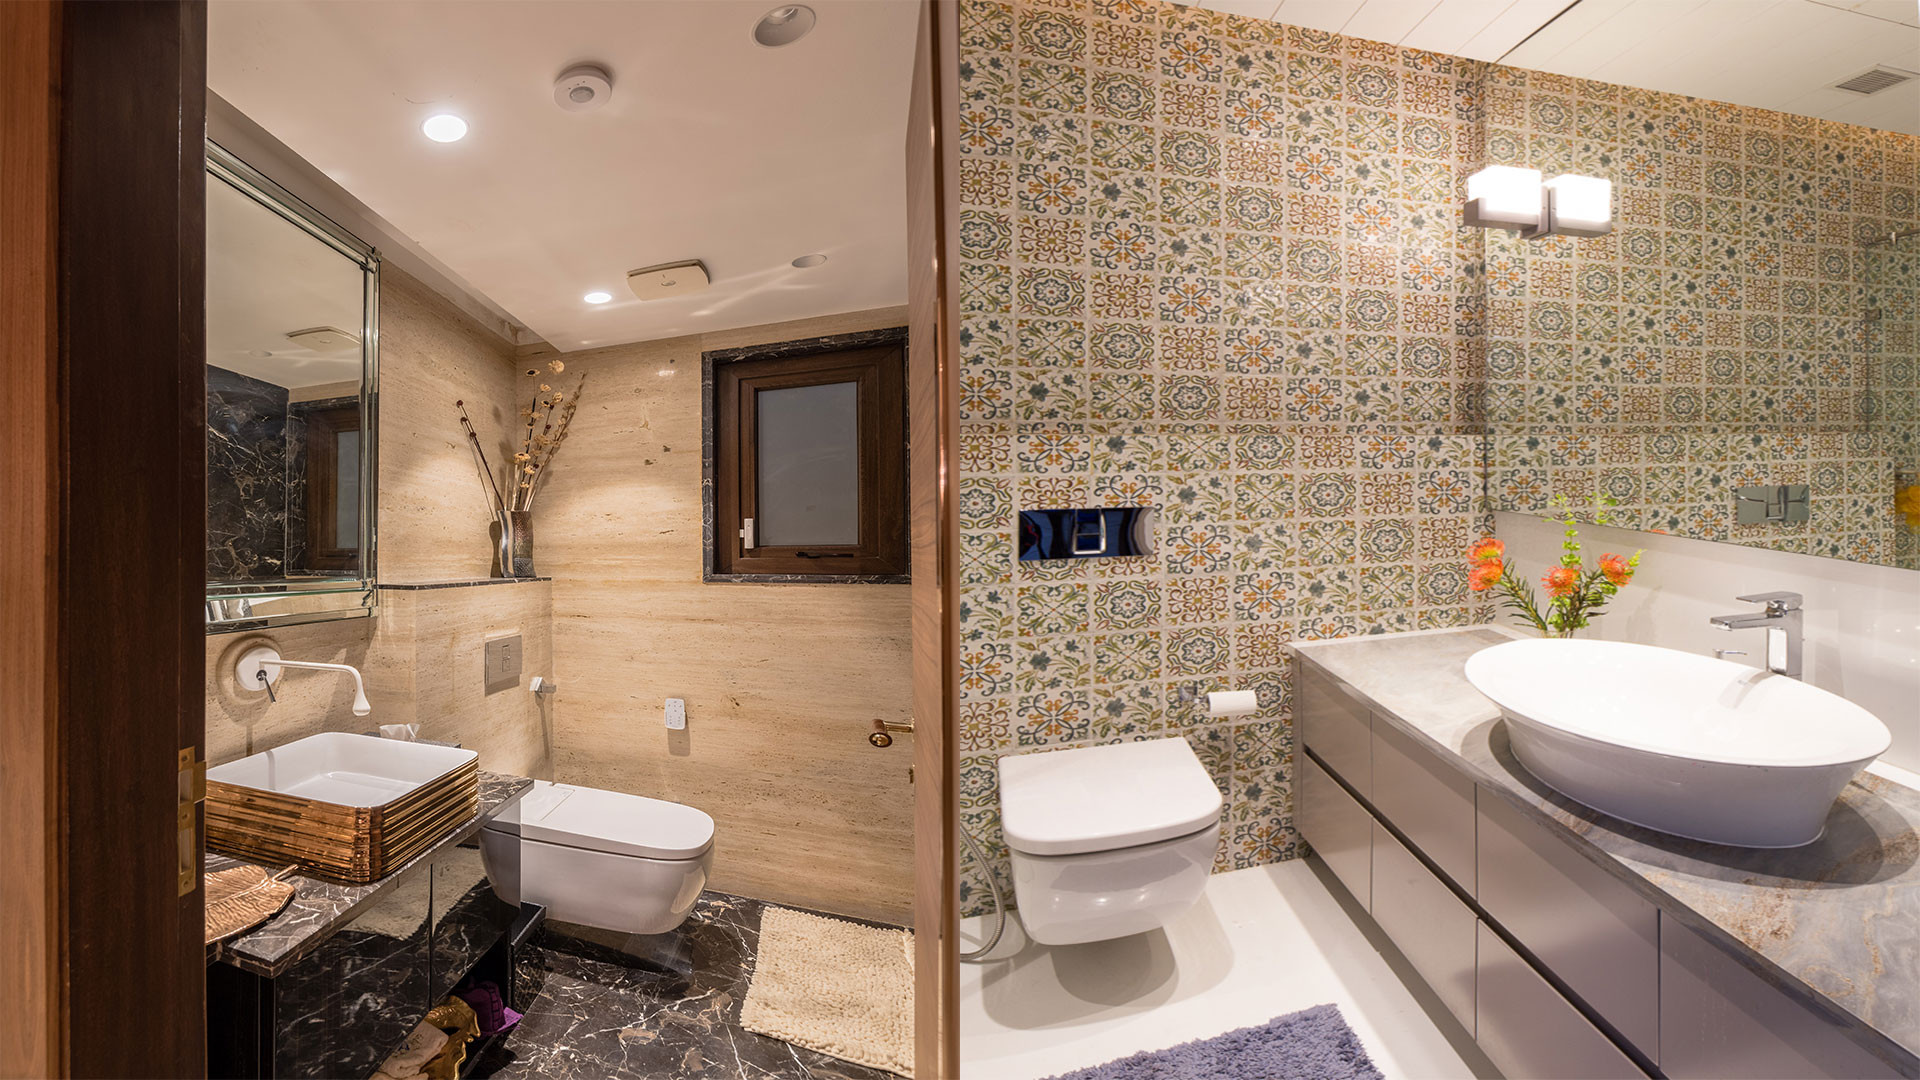 Bathroom Design Pictures
 Bathroom Design Experts revel ways to design this space